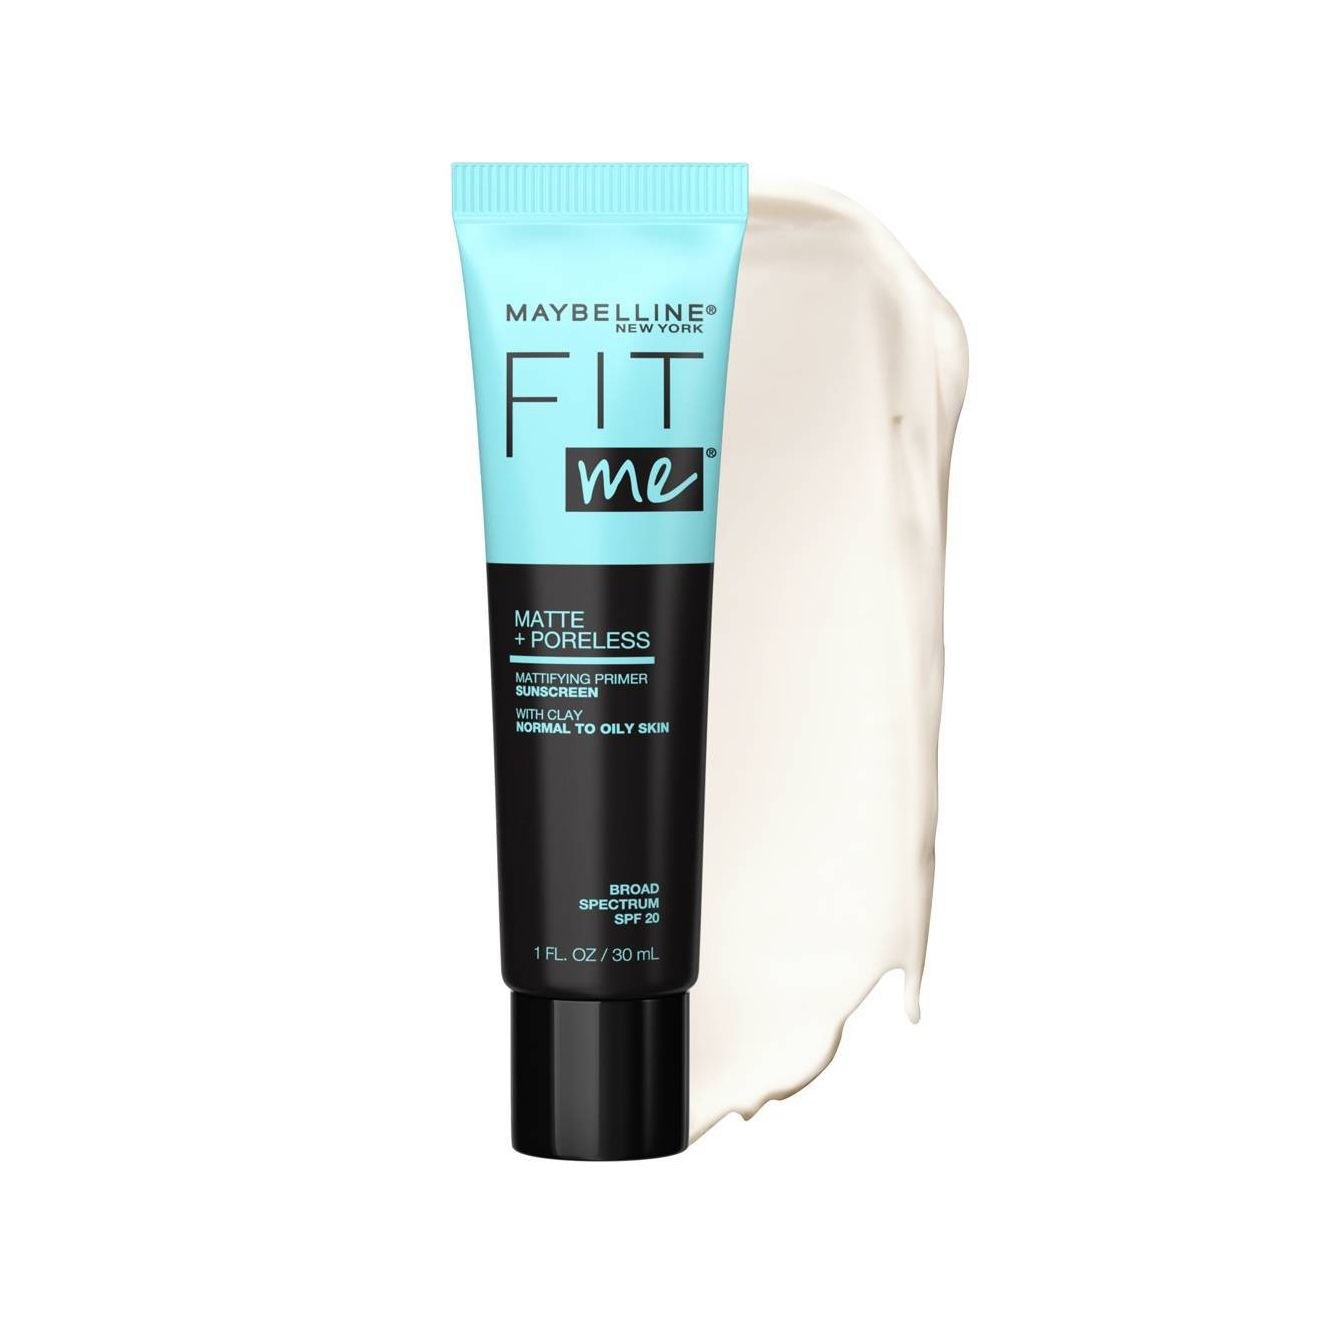 the tube of face primer